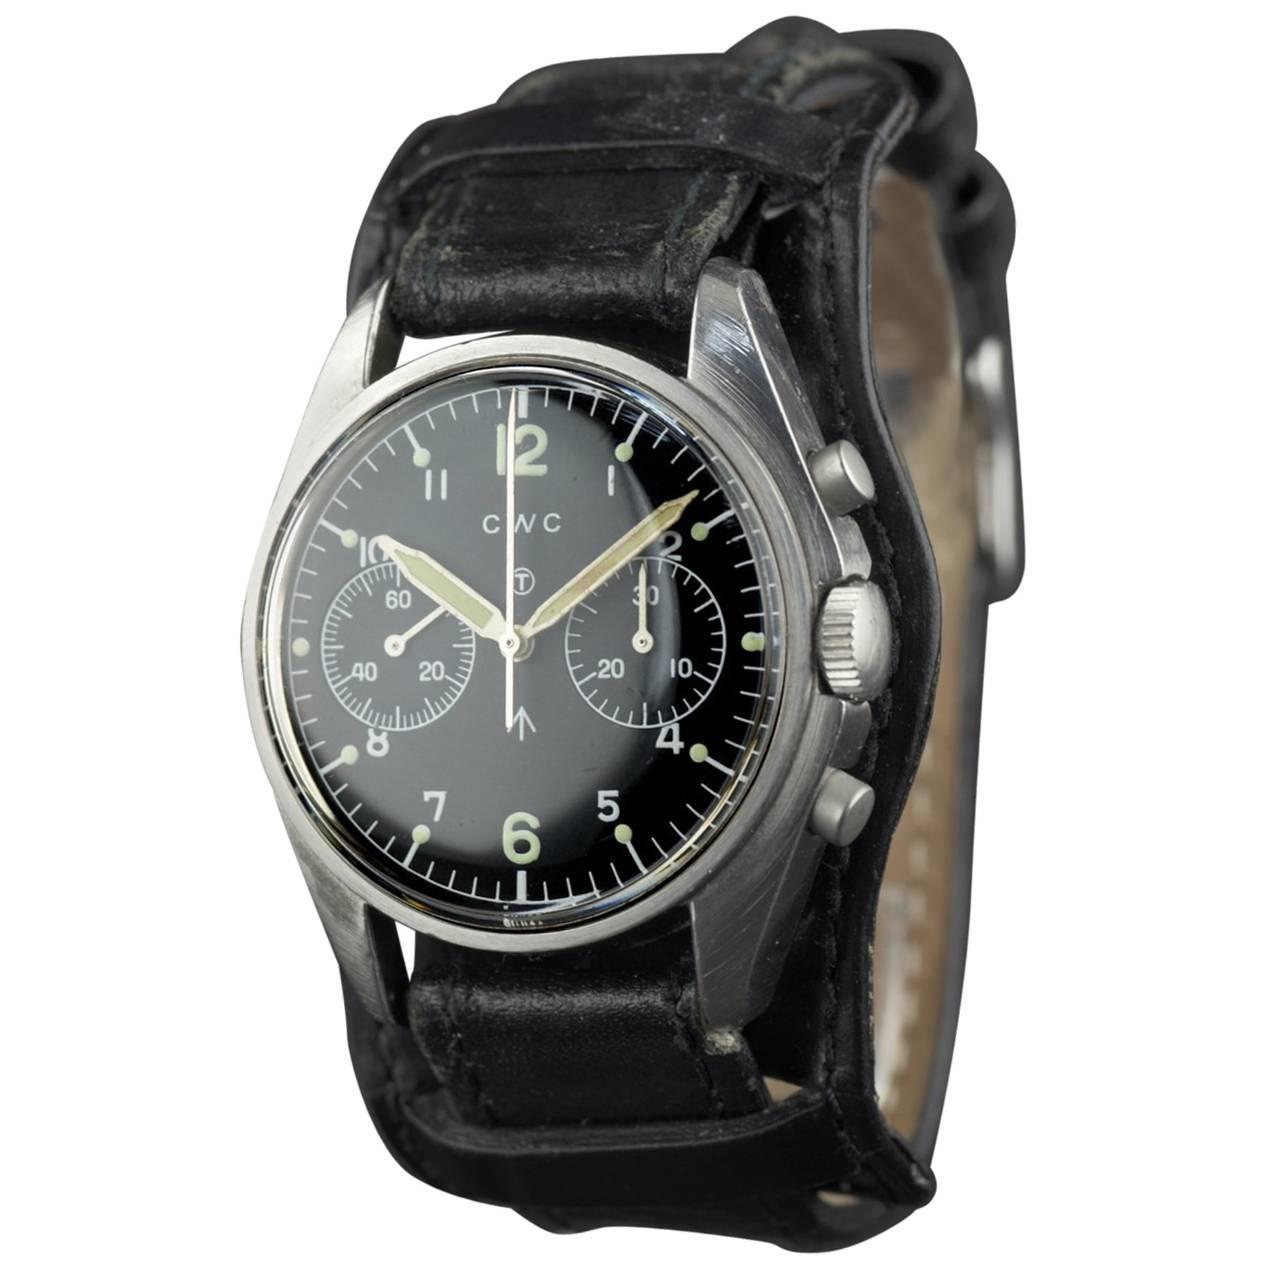 Cortebert CWC Stainless Steel British Airforce Chronograph Wristwatch, 1978 For Sale